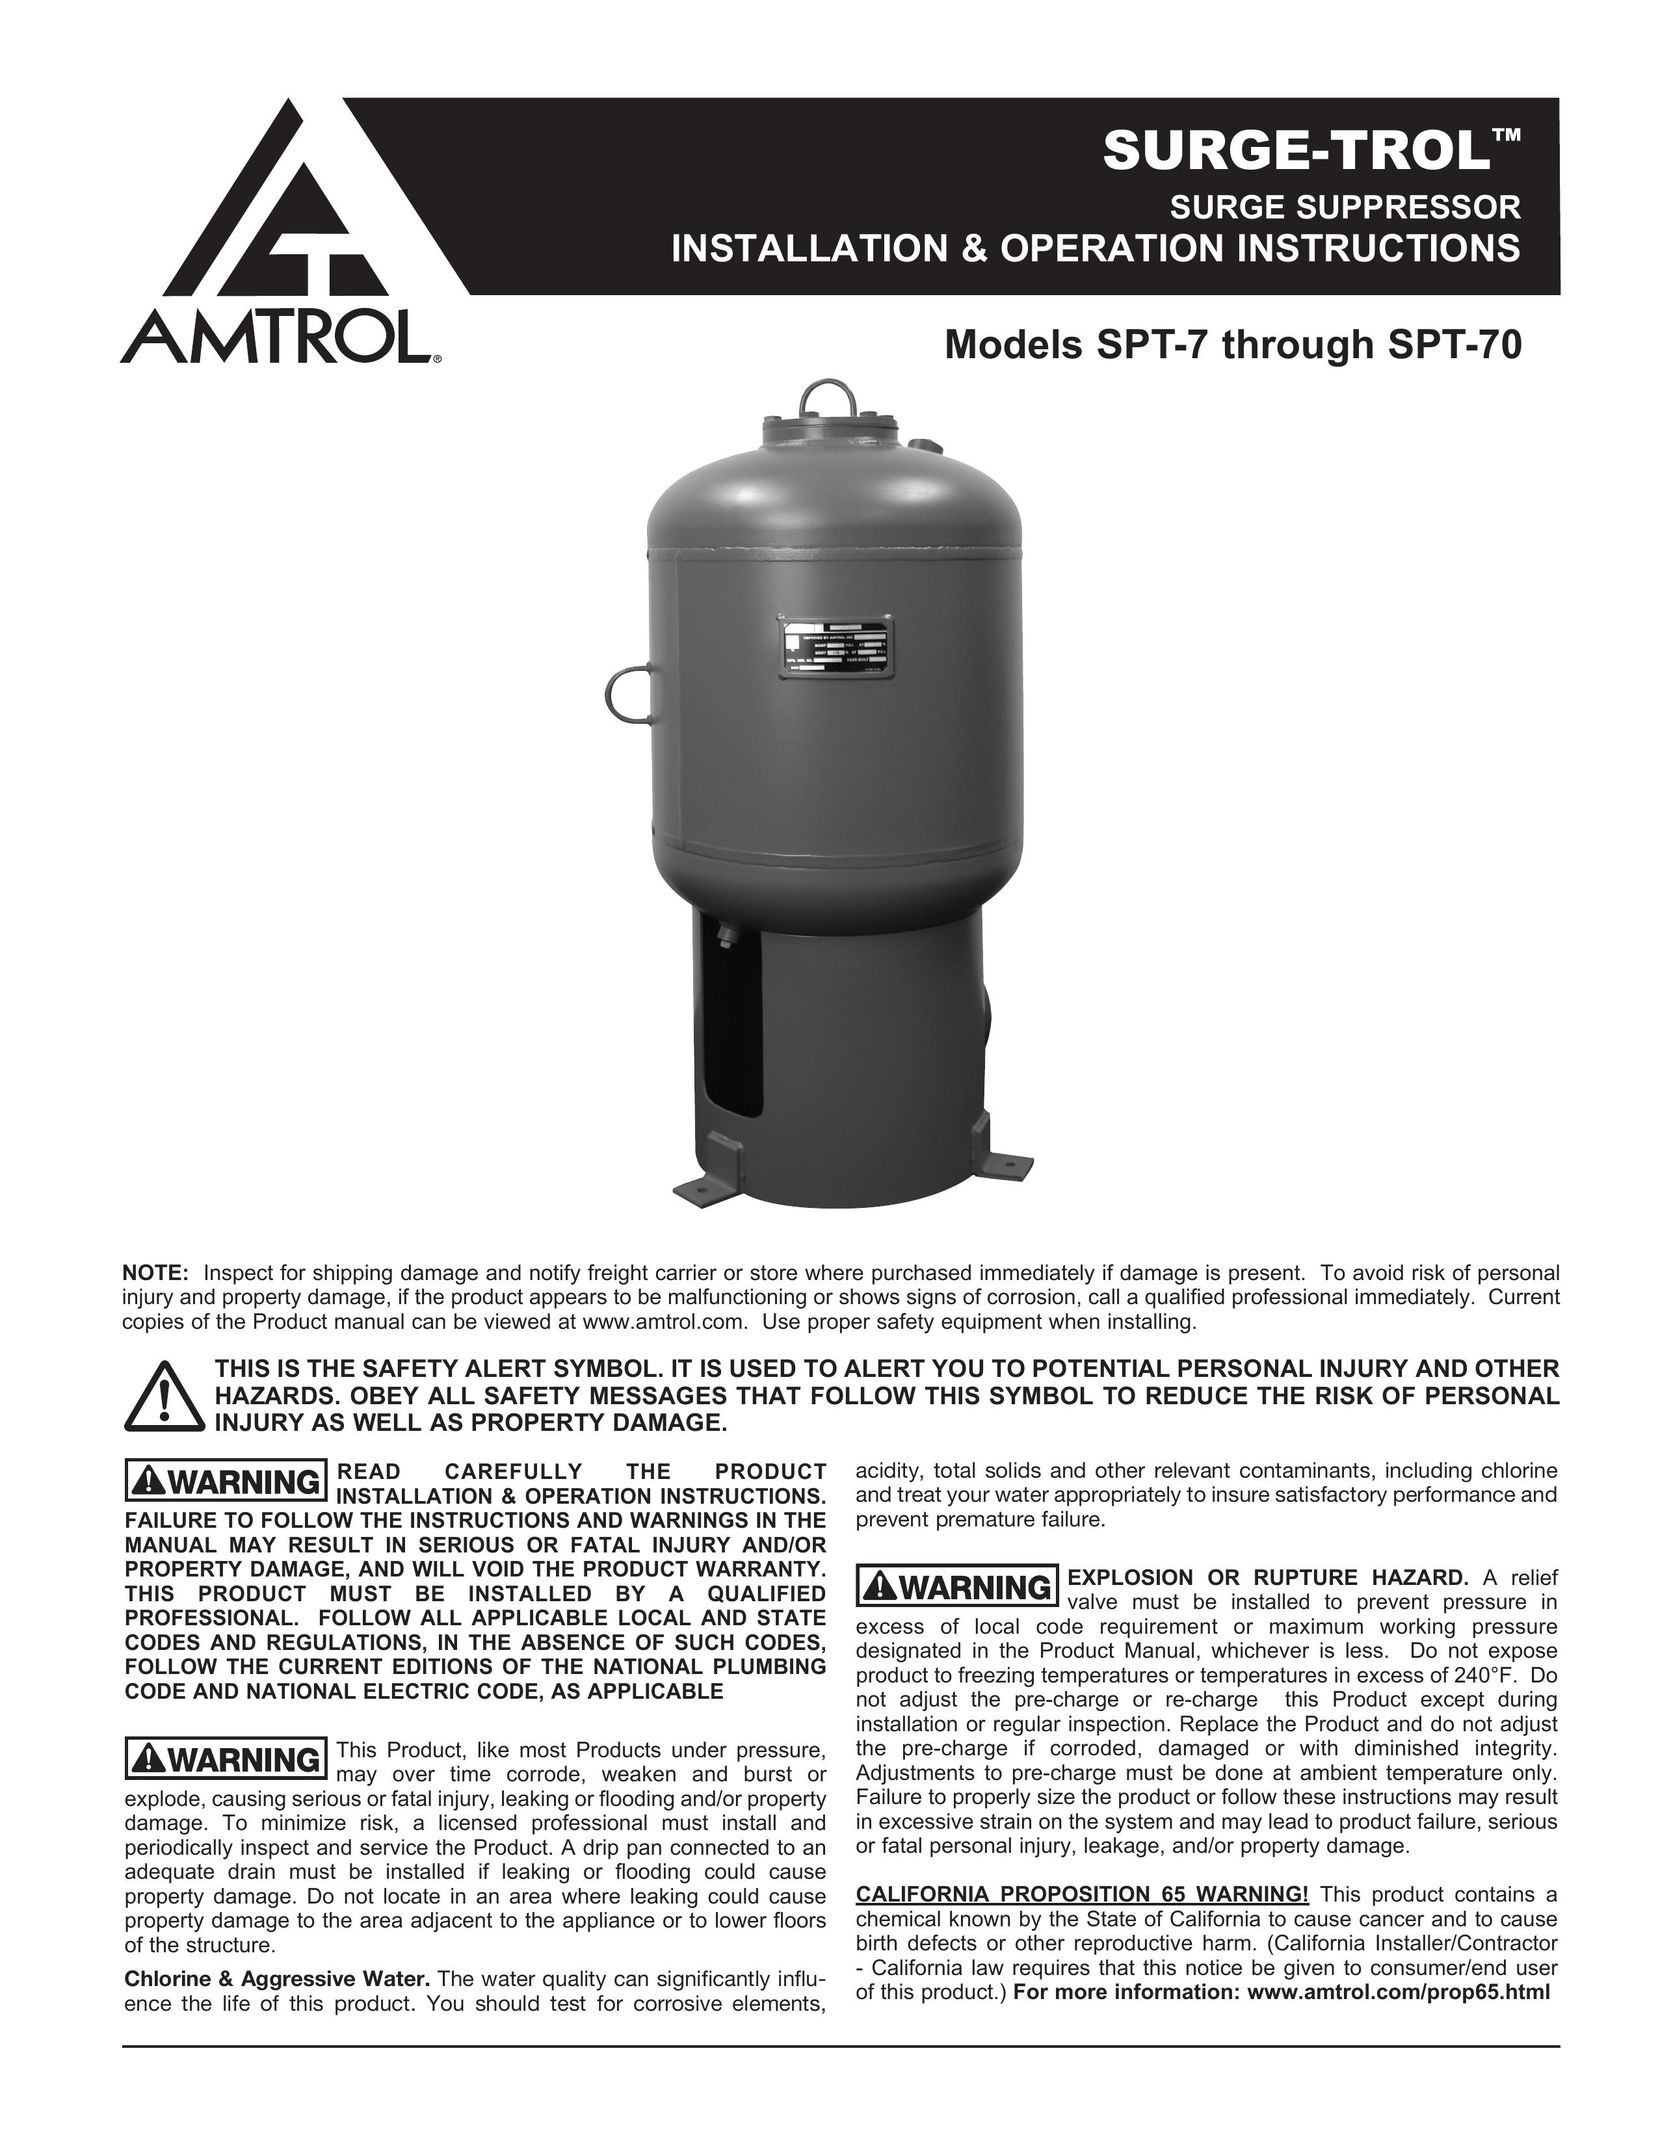 Amtrol SPT-7 Surge Protector User Manual